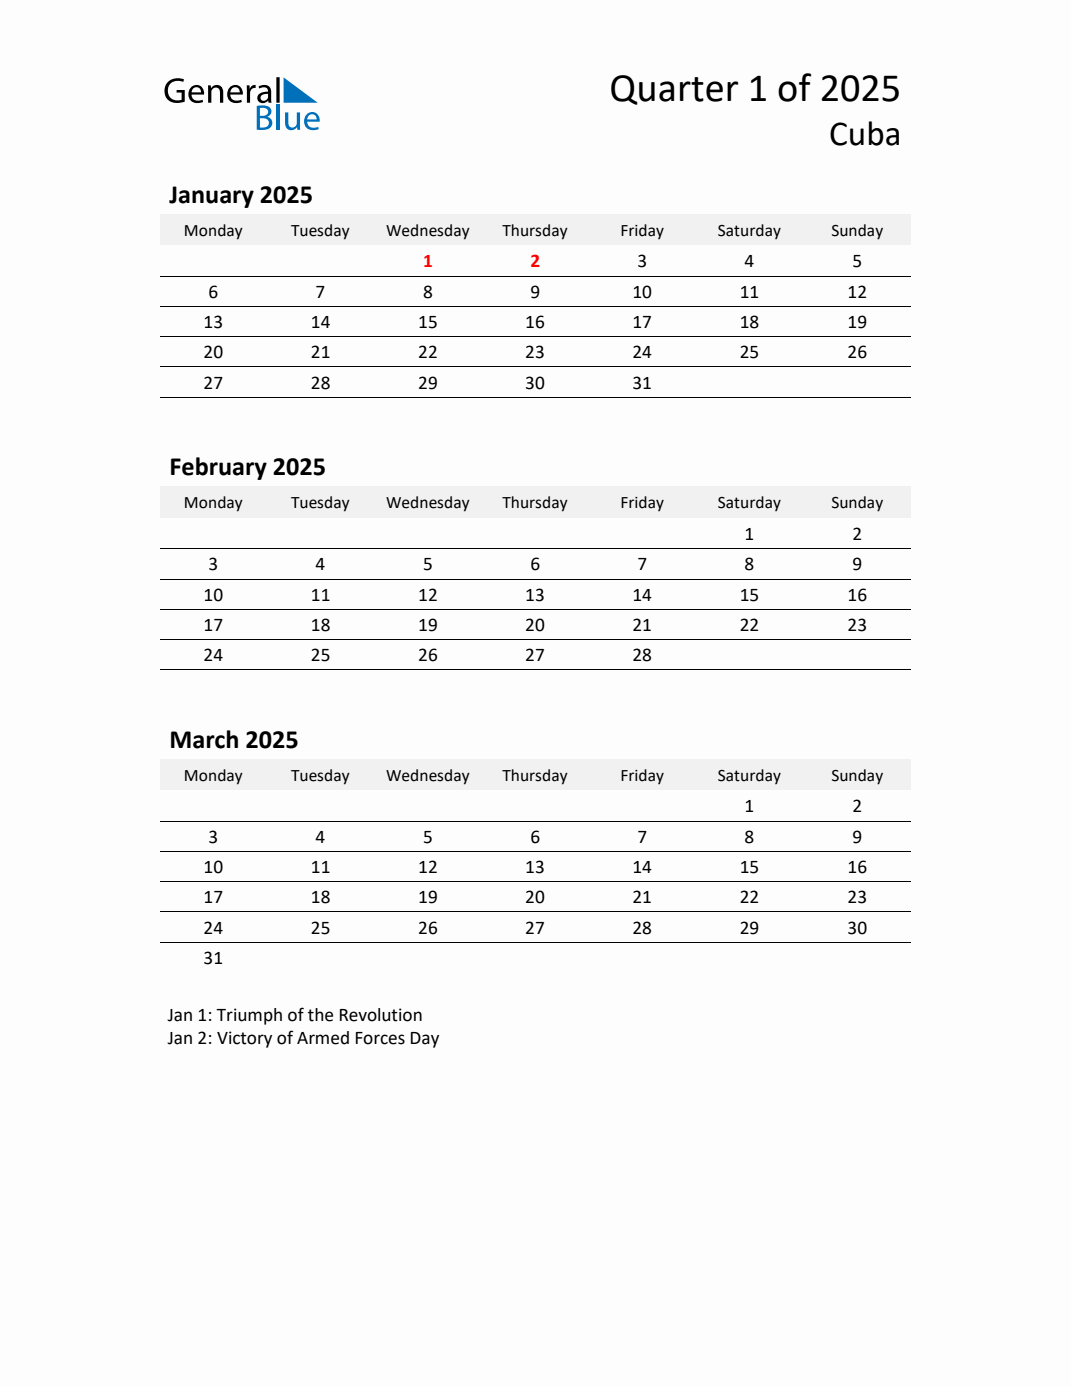 Threemonth calendar for Cuba Q1 of 2025